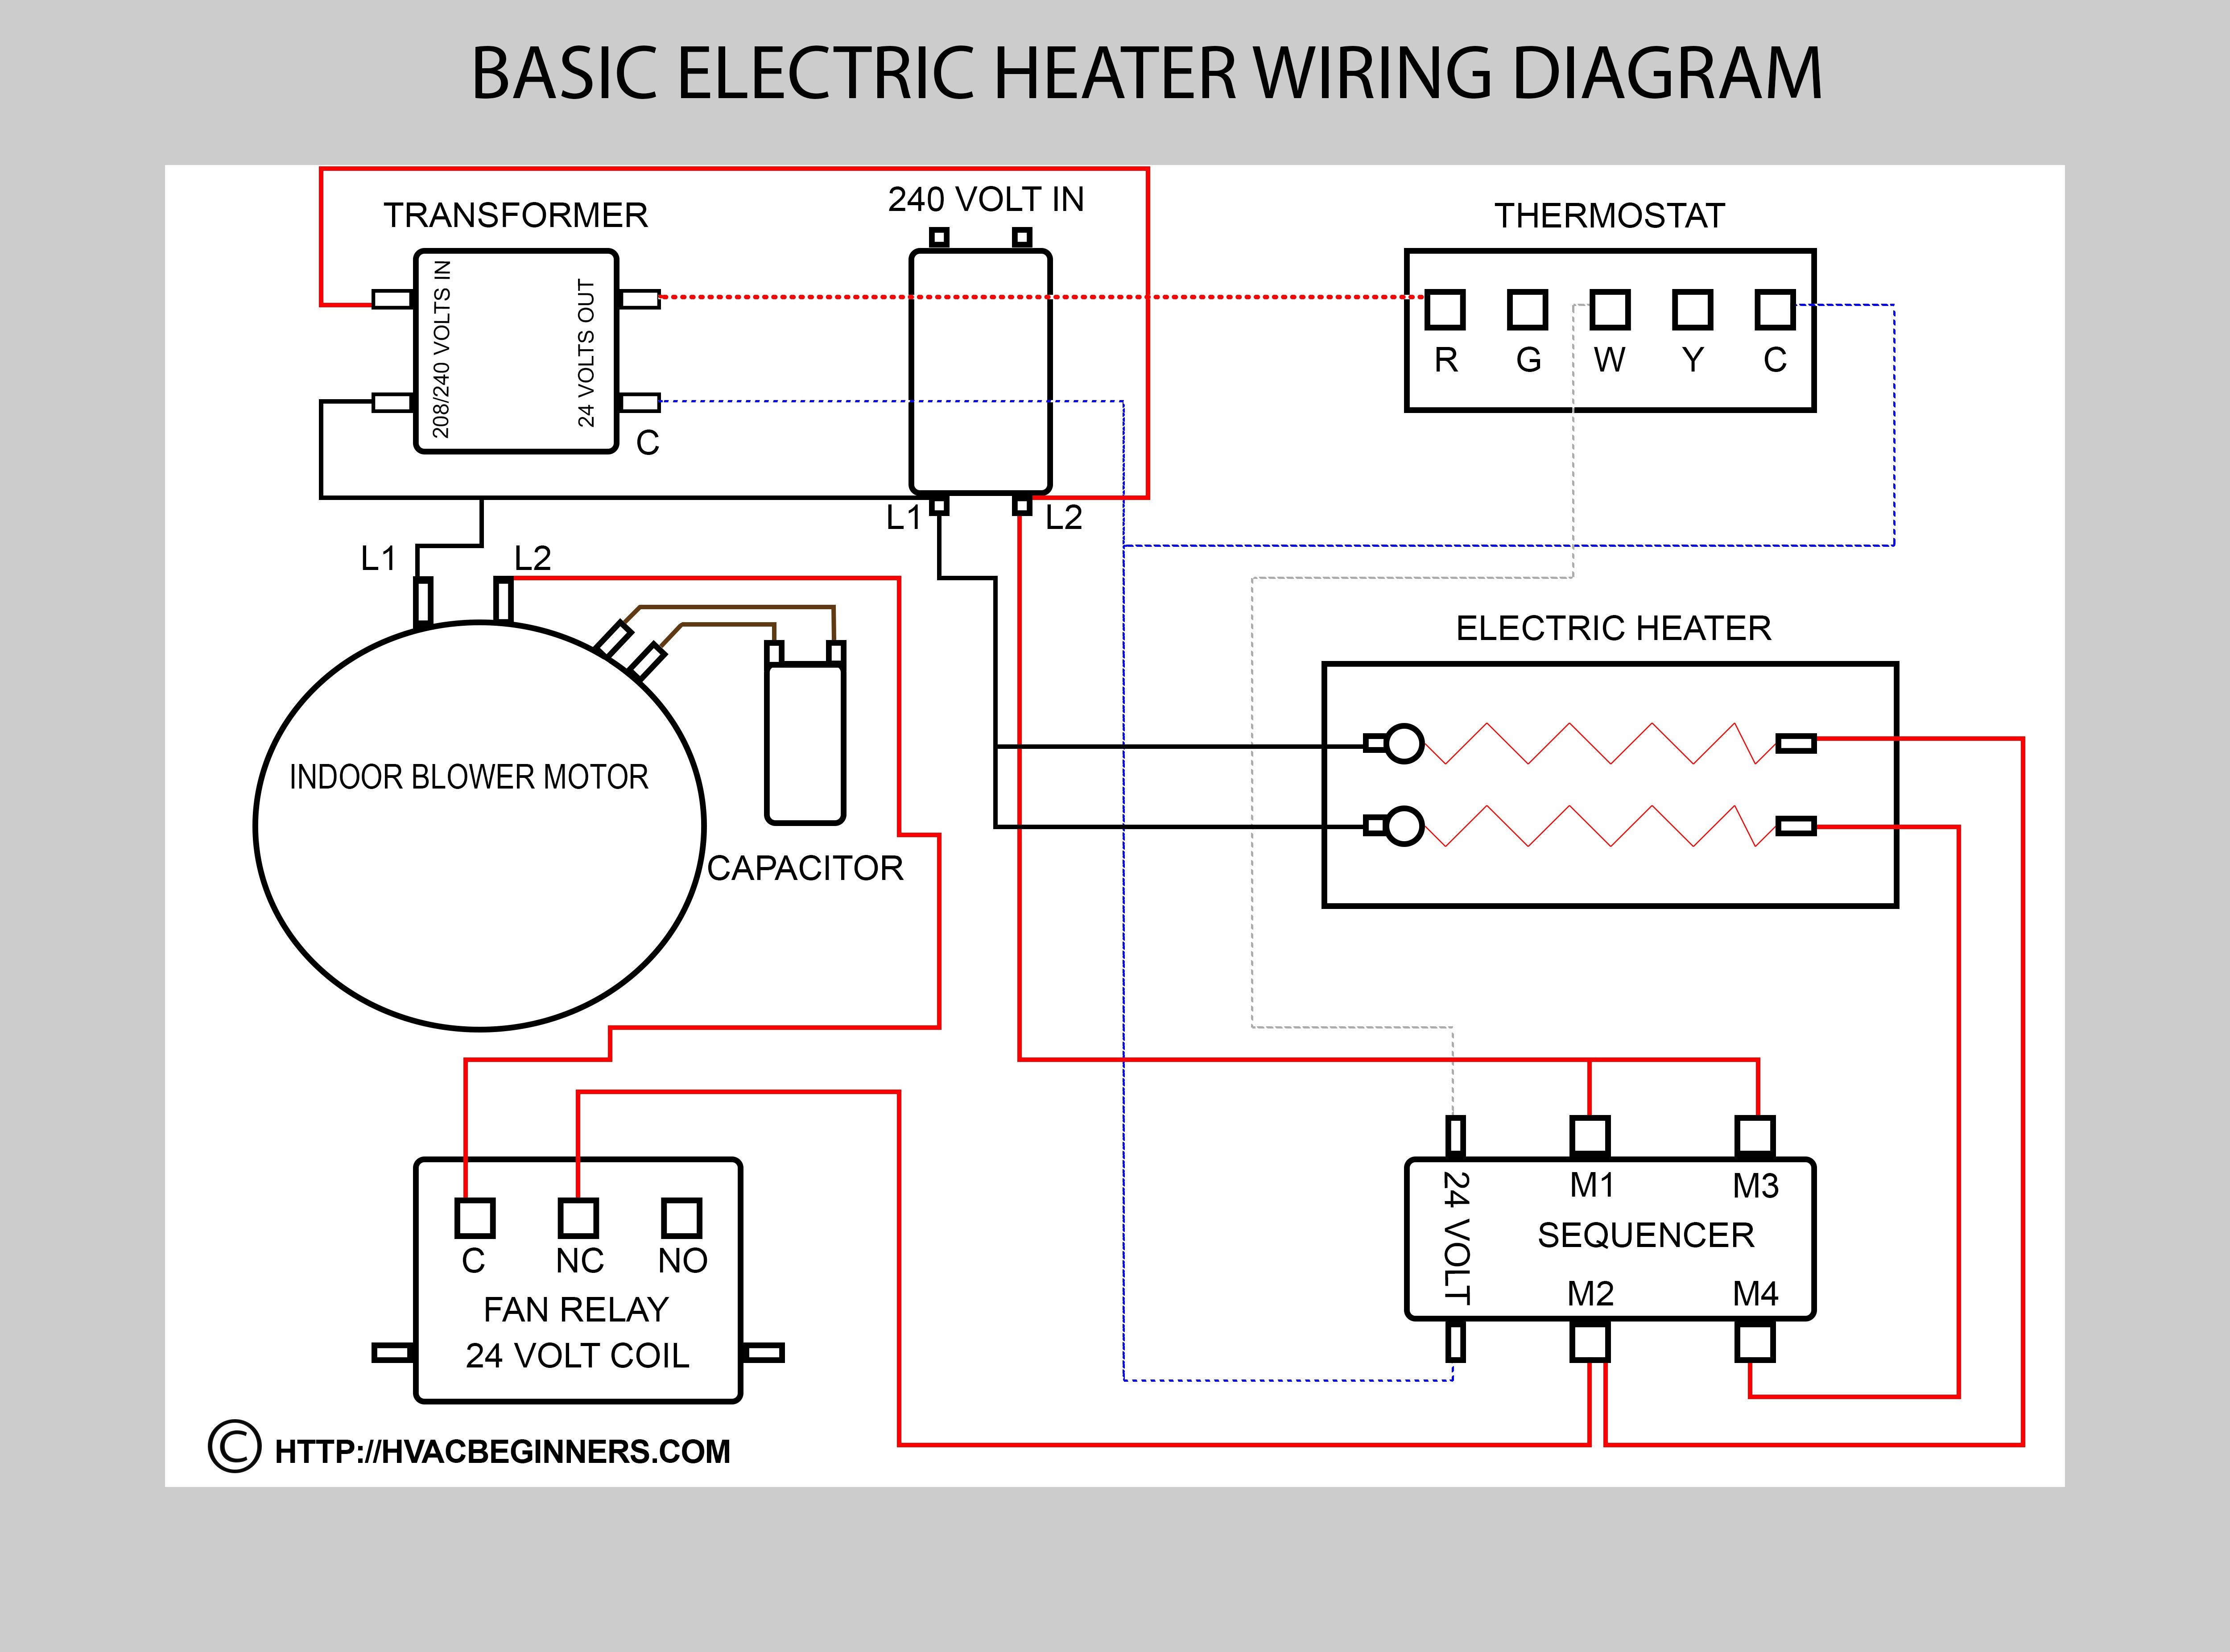 Hvac Fan Relay Wiring Diagram Wiring Diagram Hvac thermostat New for Air Mesmerizing Afif Of Hvac Fan Relay Wiring Diagram